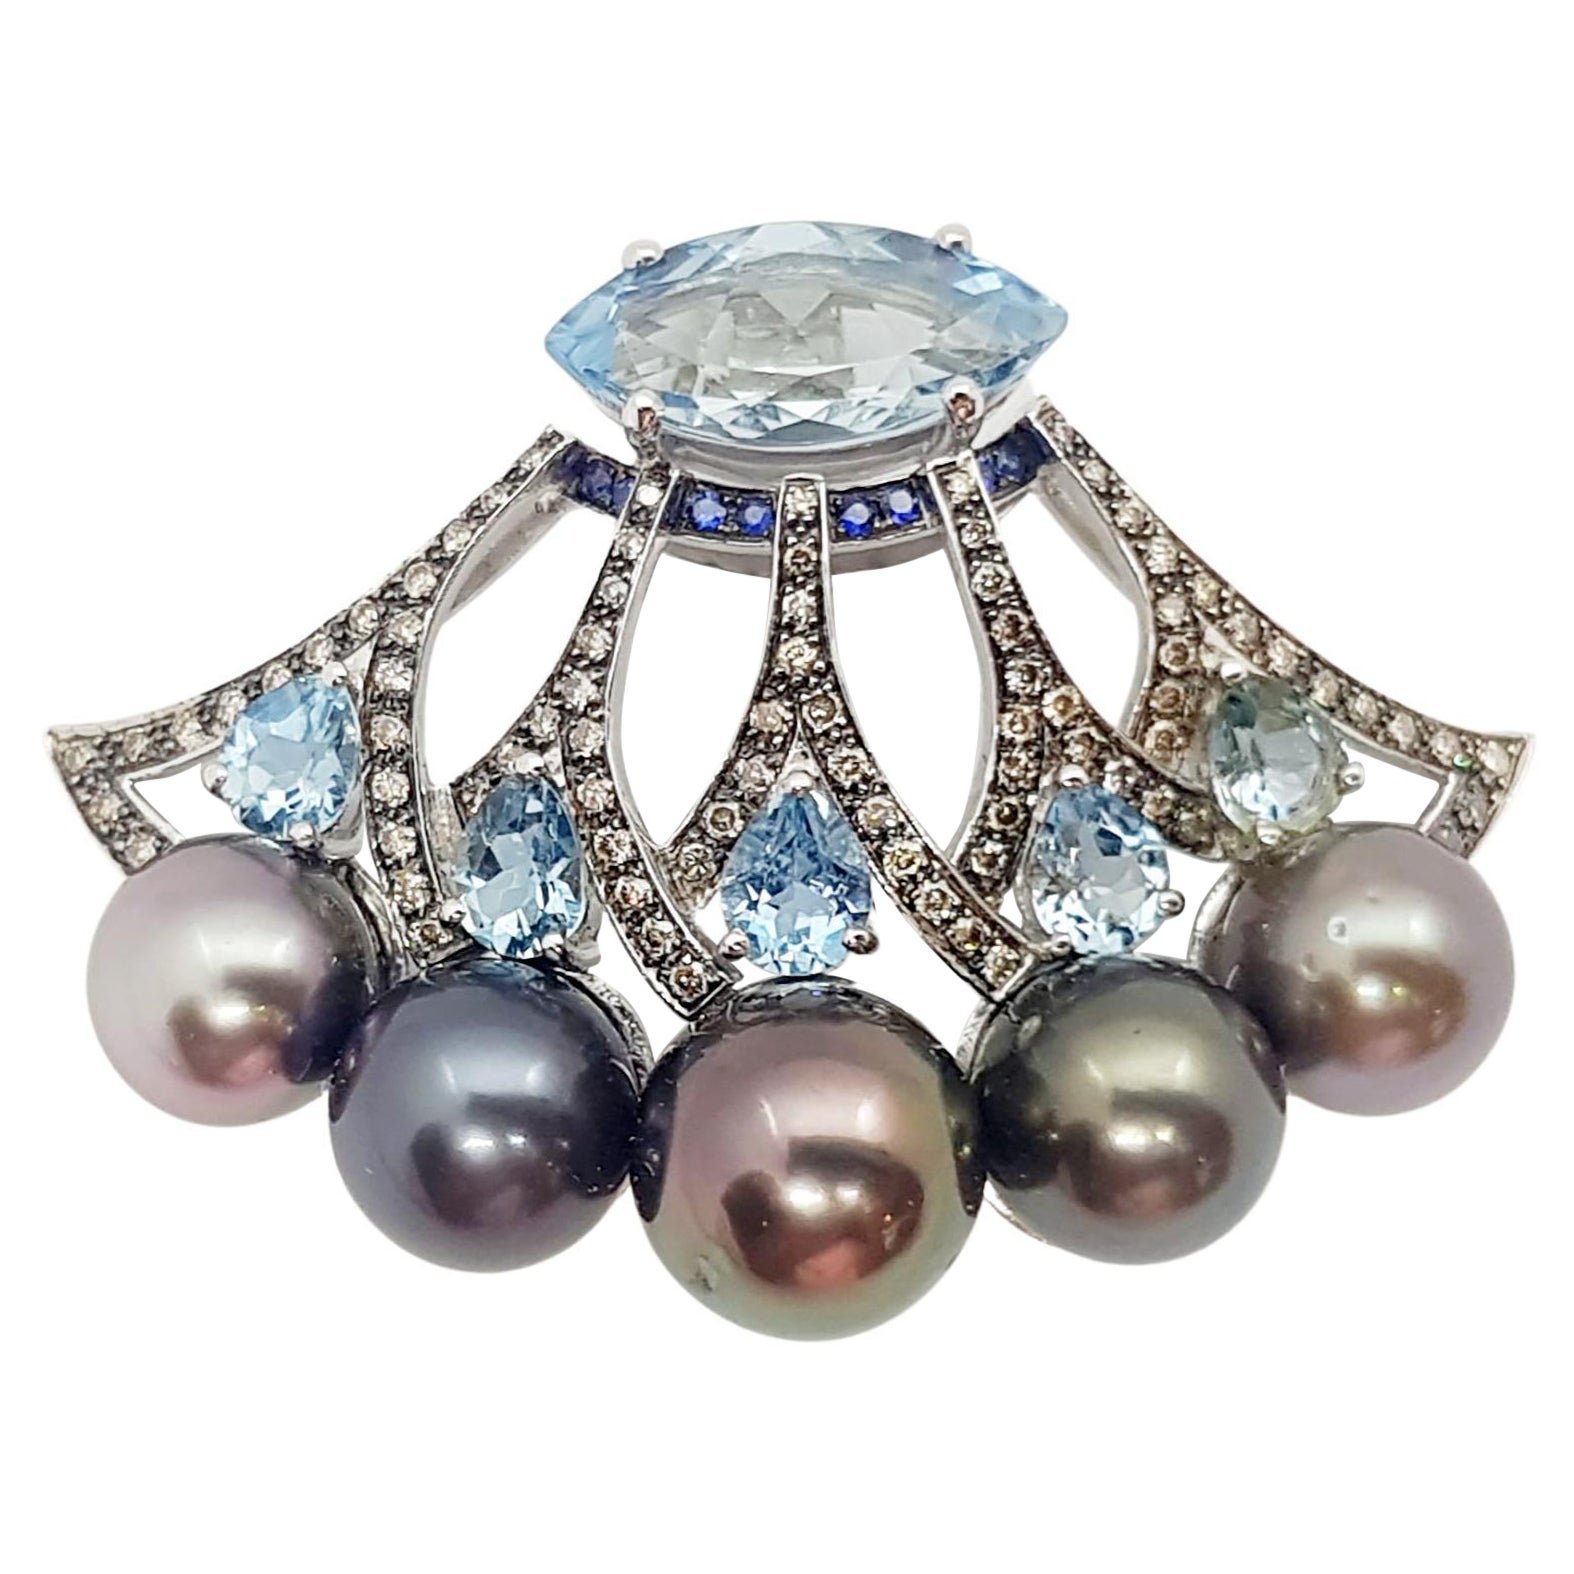 Pearl, Aquamarine, Blue Sapphire and Brown Diamond Pendant 18 Karat White Gold